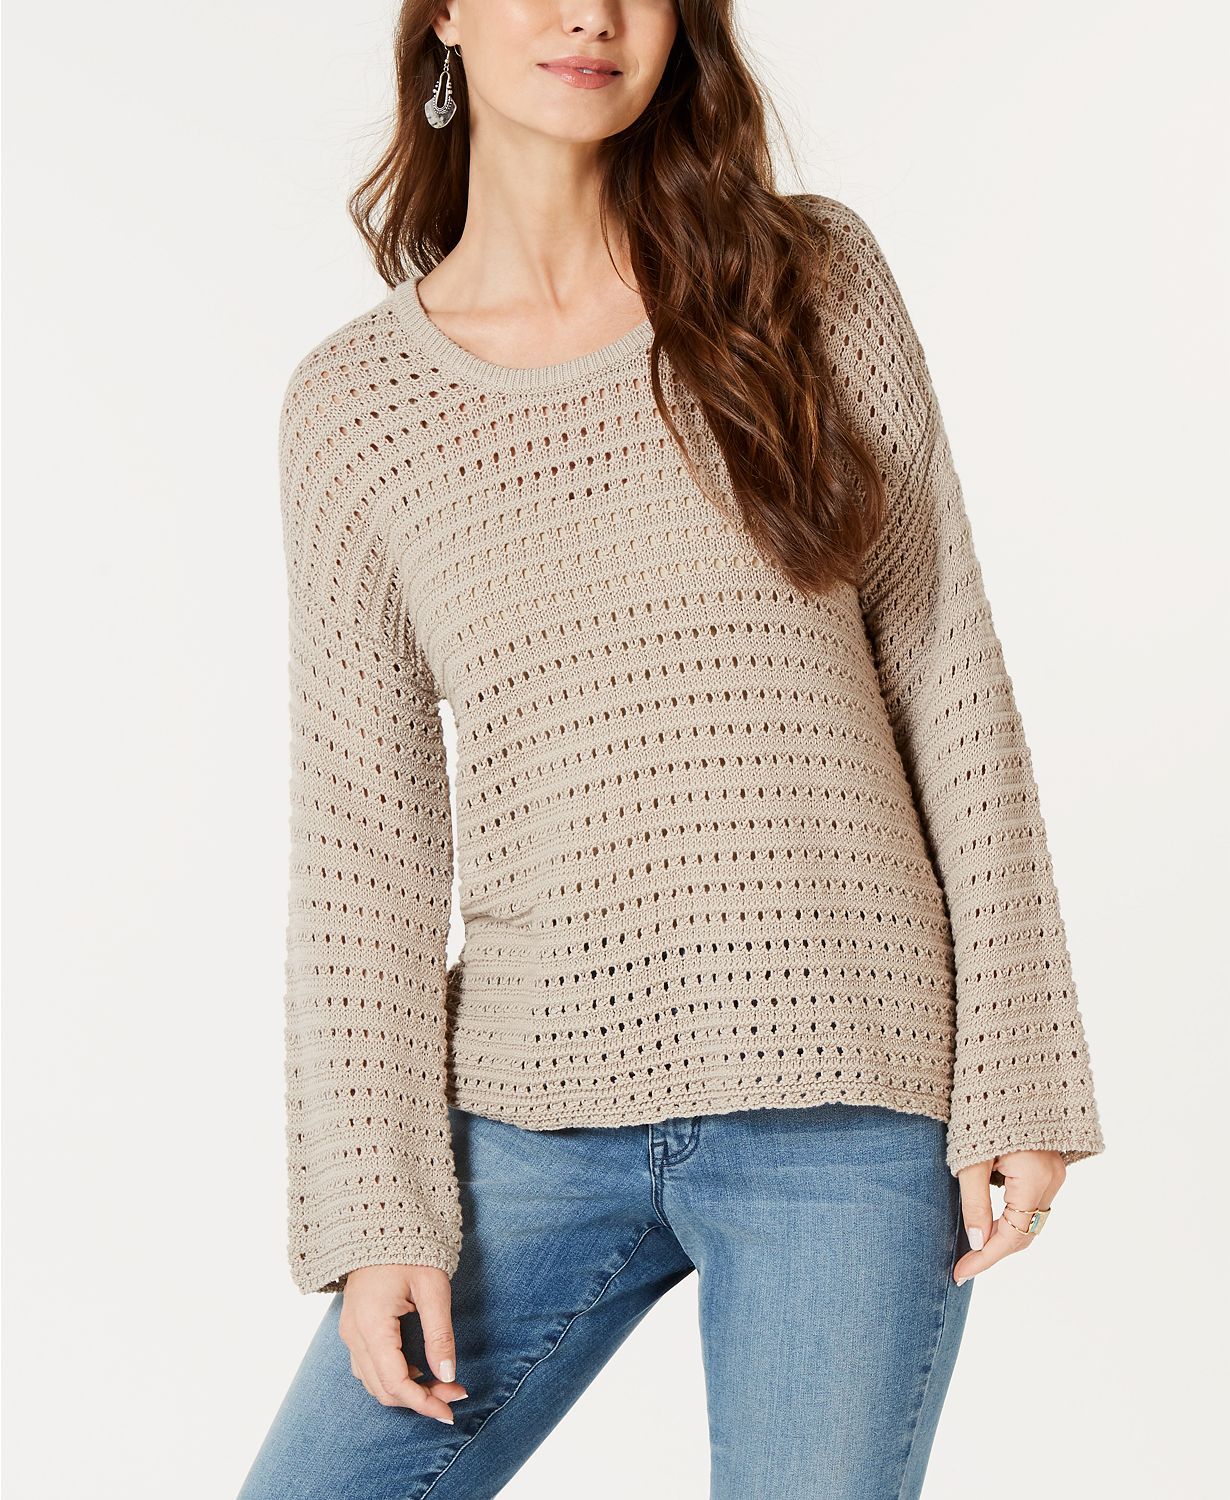 Style & Co Cotton Pointelle Sweater Tan/Beige L